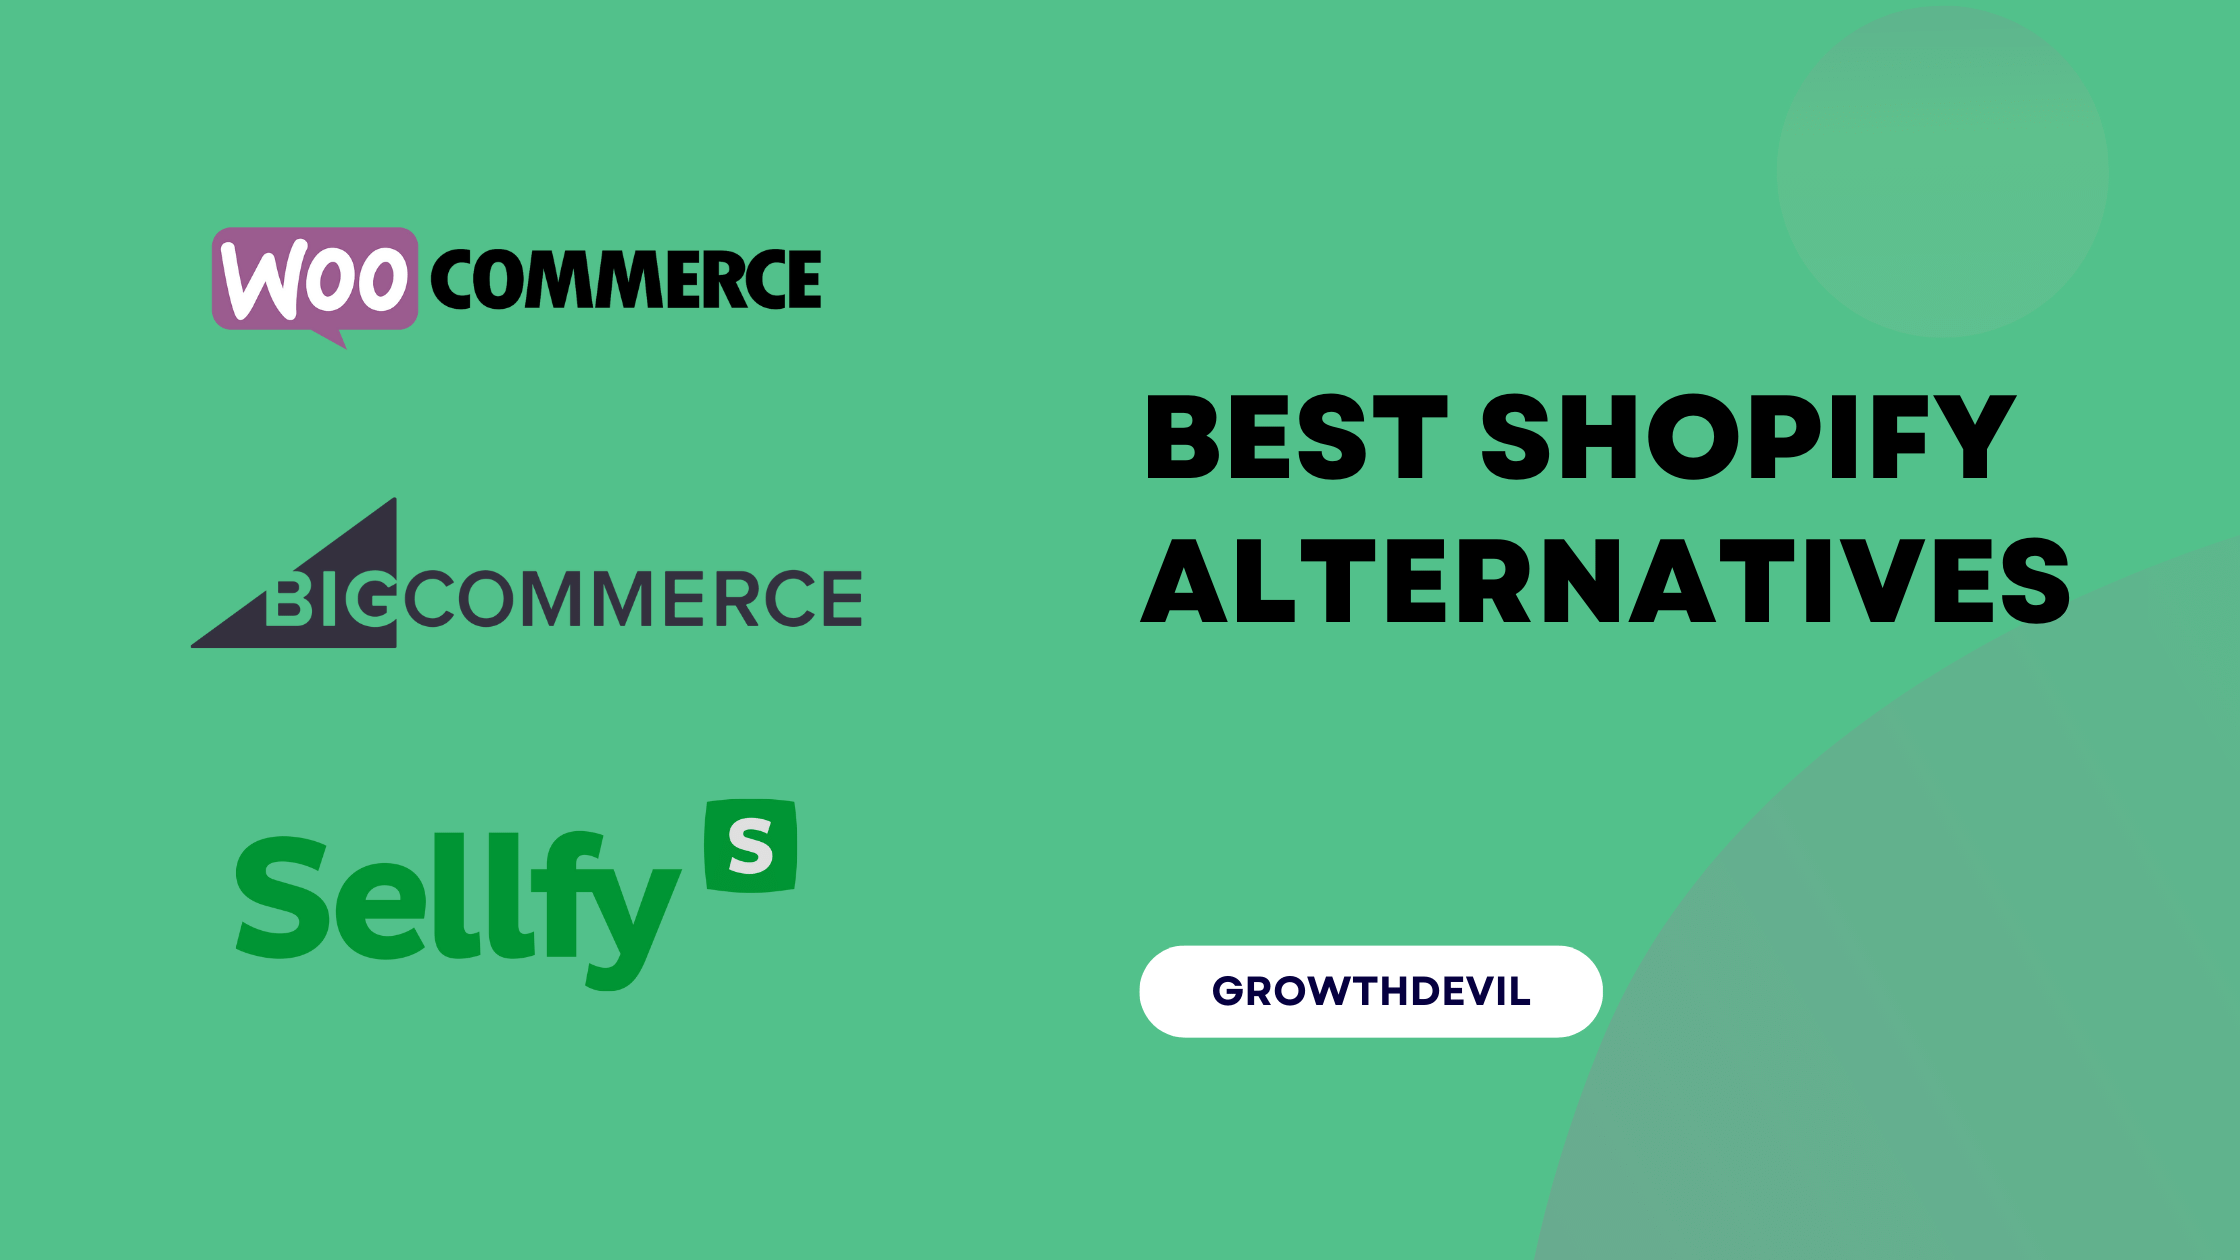 Best Shopify Alternatives - GrowthDevil